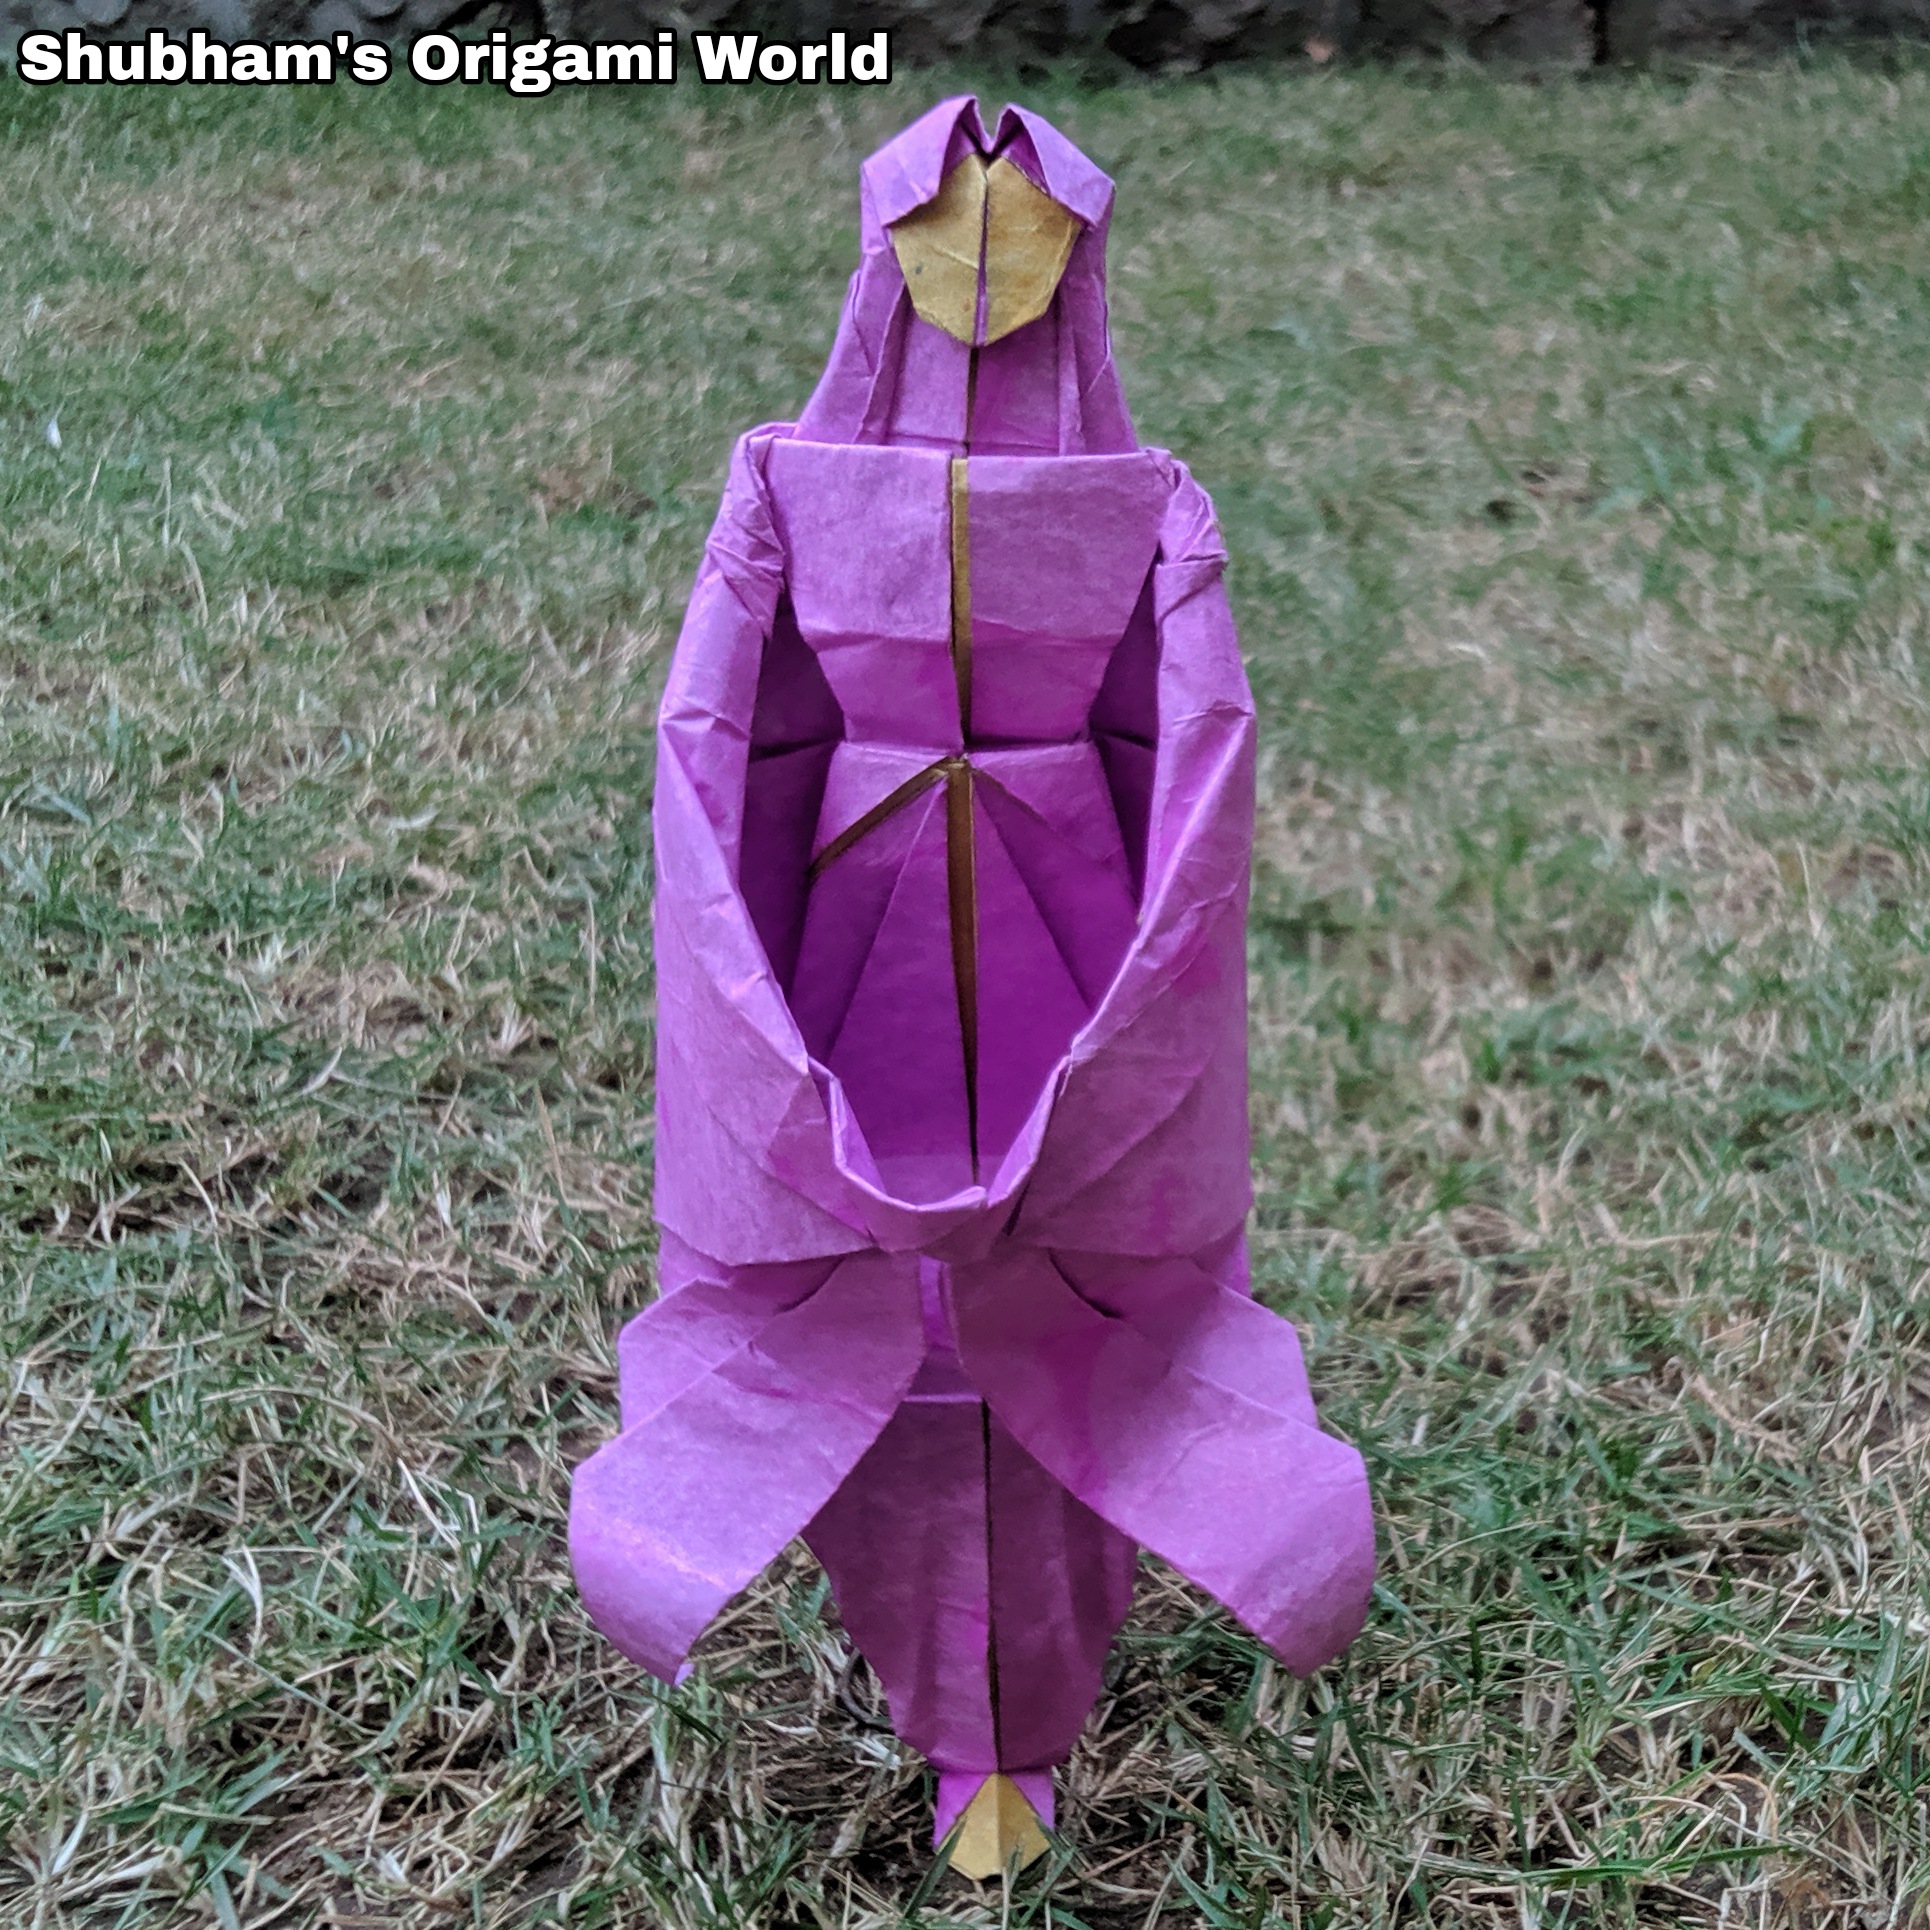 Origami Japanese Girl designed by Shubham Mathur